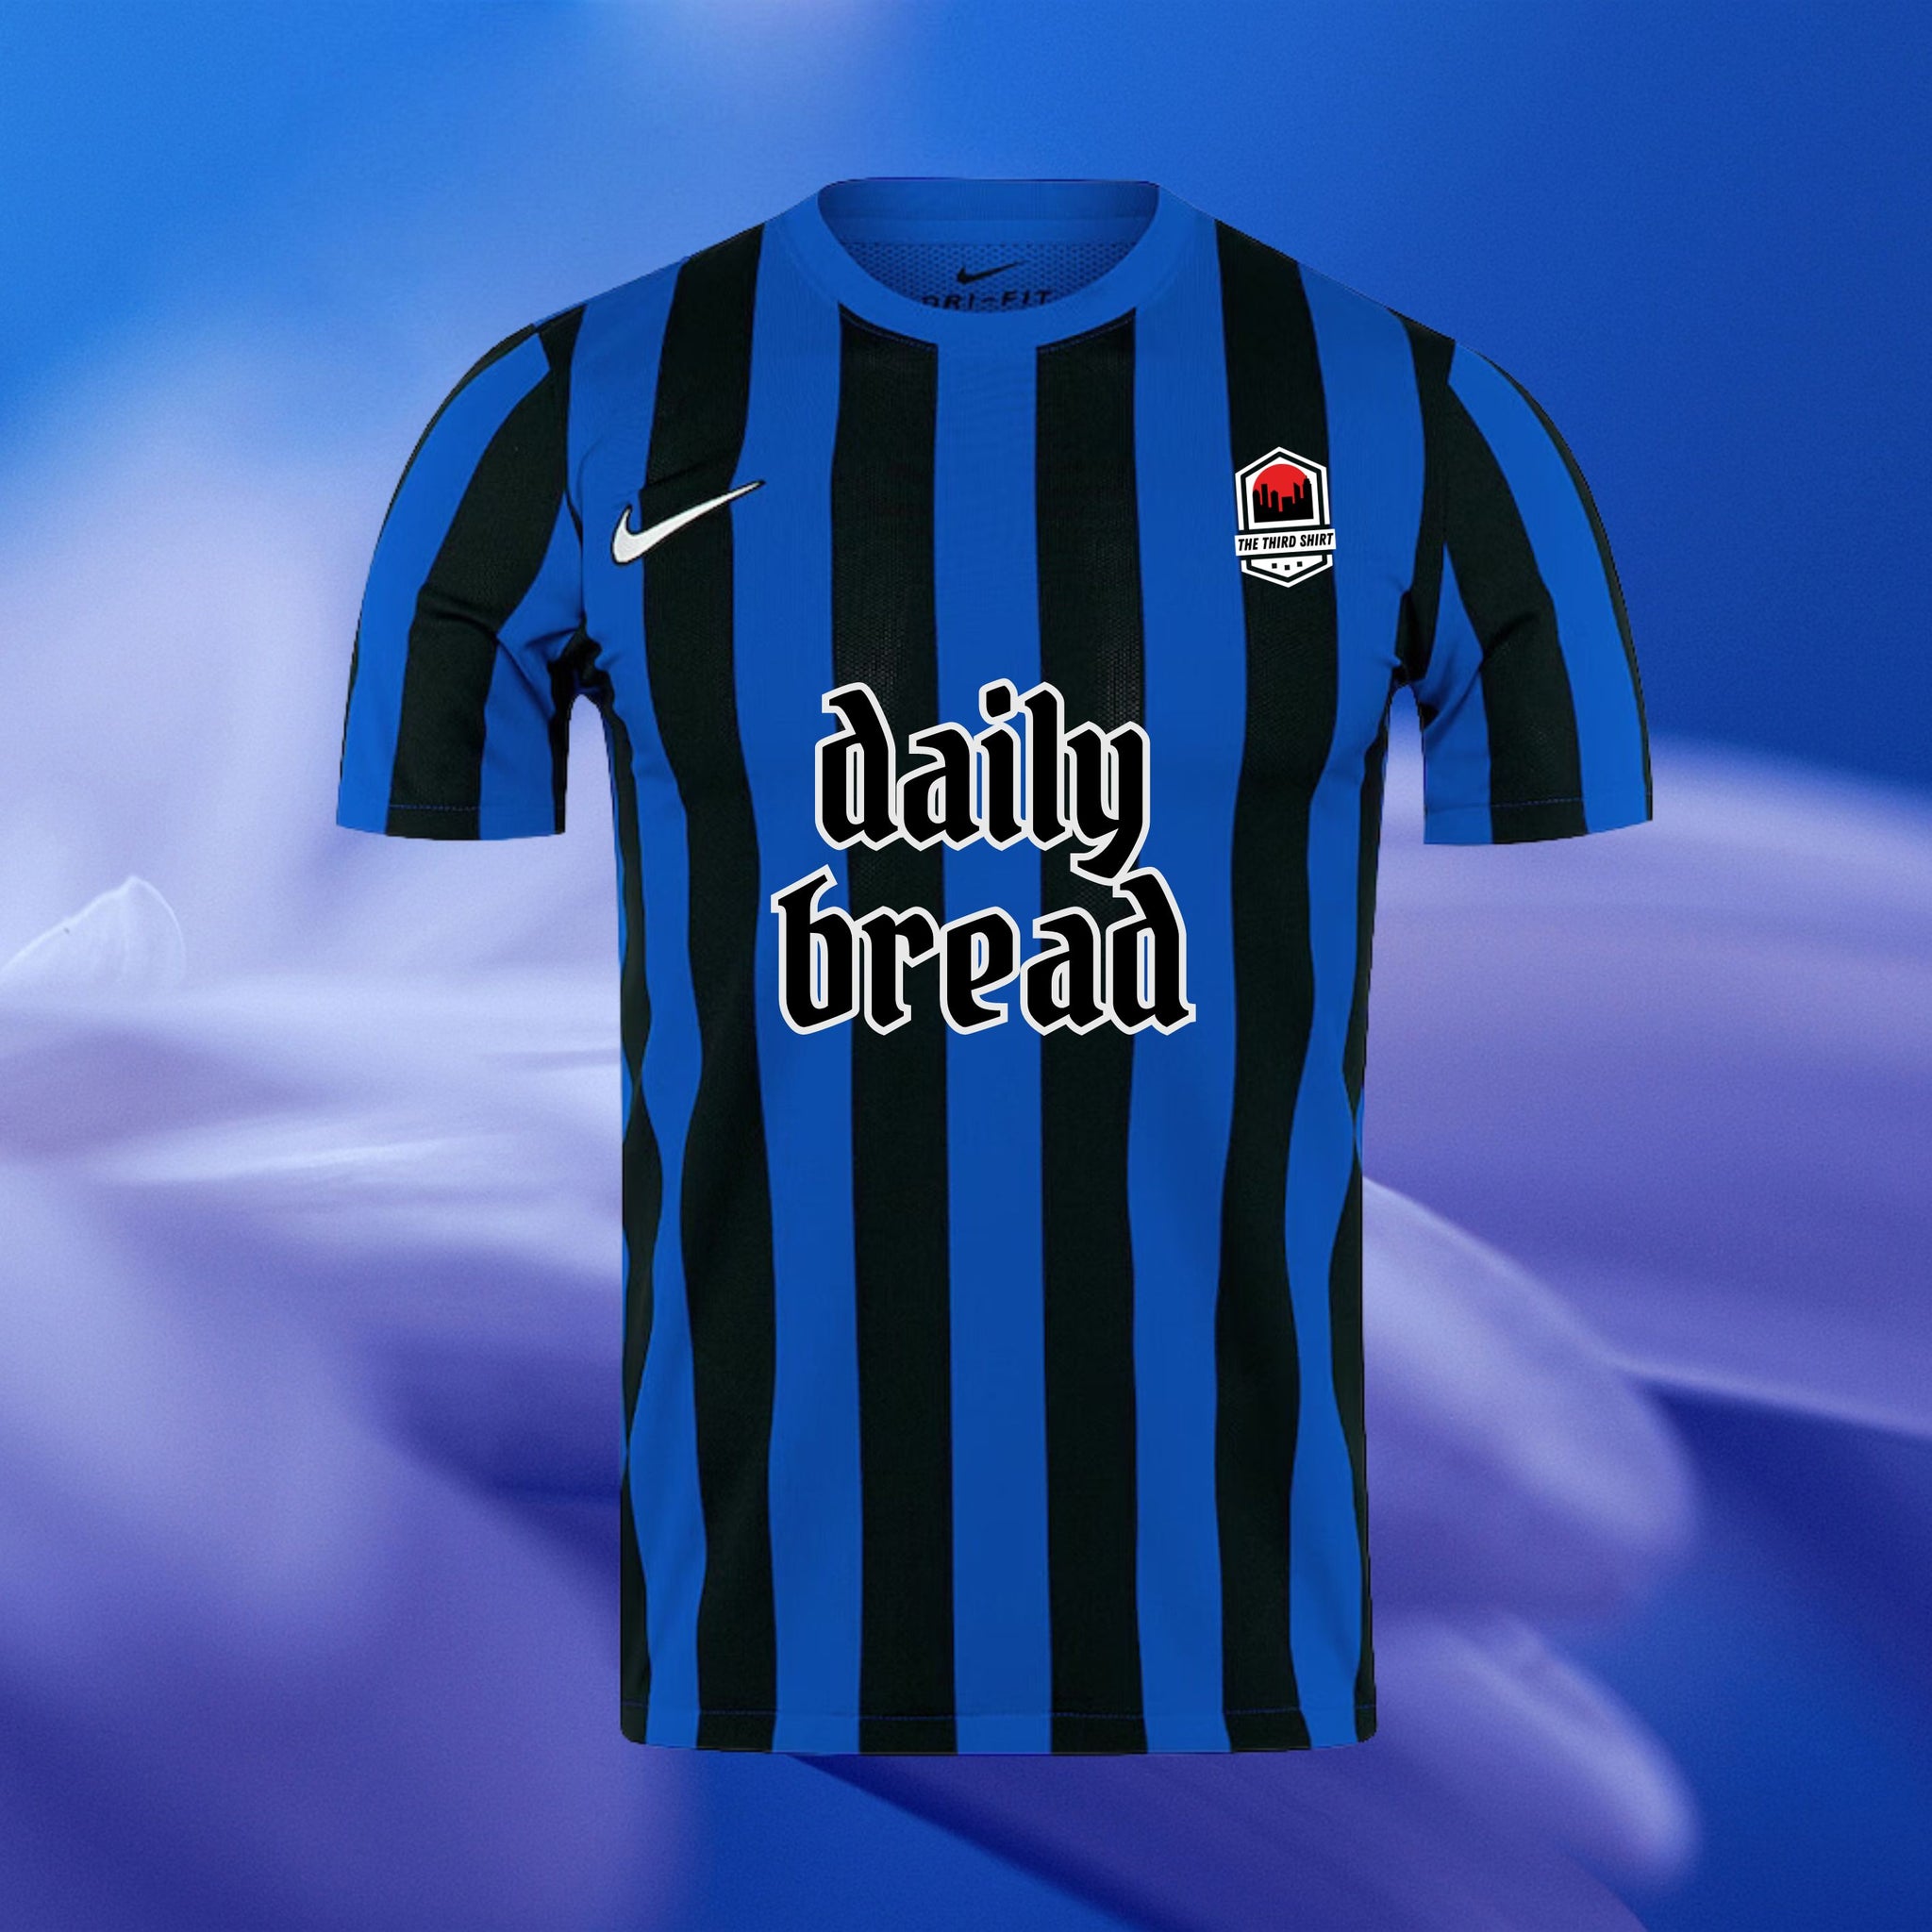 Daily Bread - Blue/Black - Nike Dri-FIT Striped Division Shirt